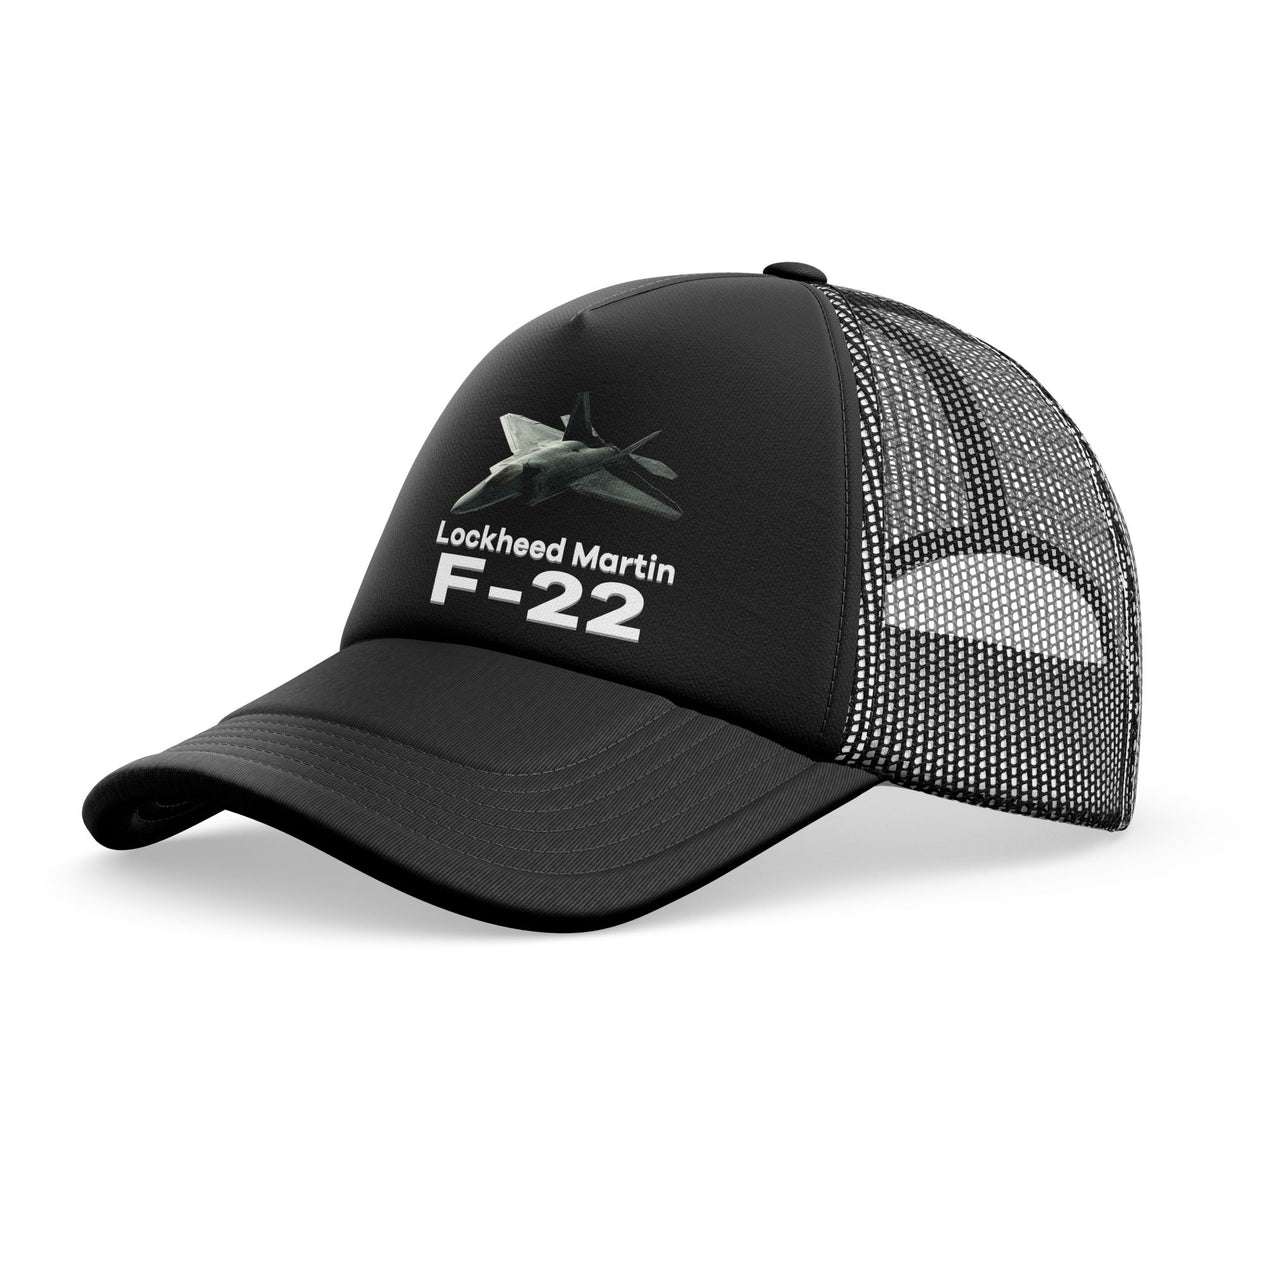 The Lockheed Martin F22 Designed Trucker Caps & Hats